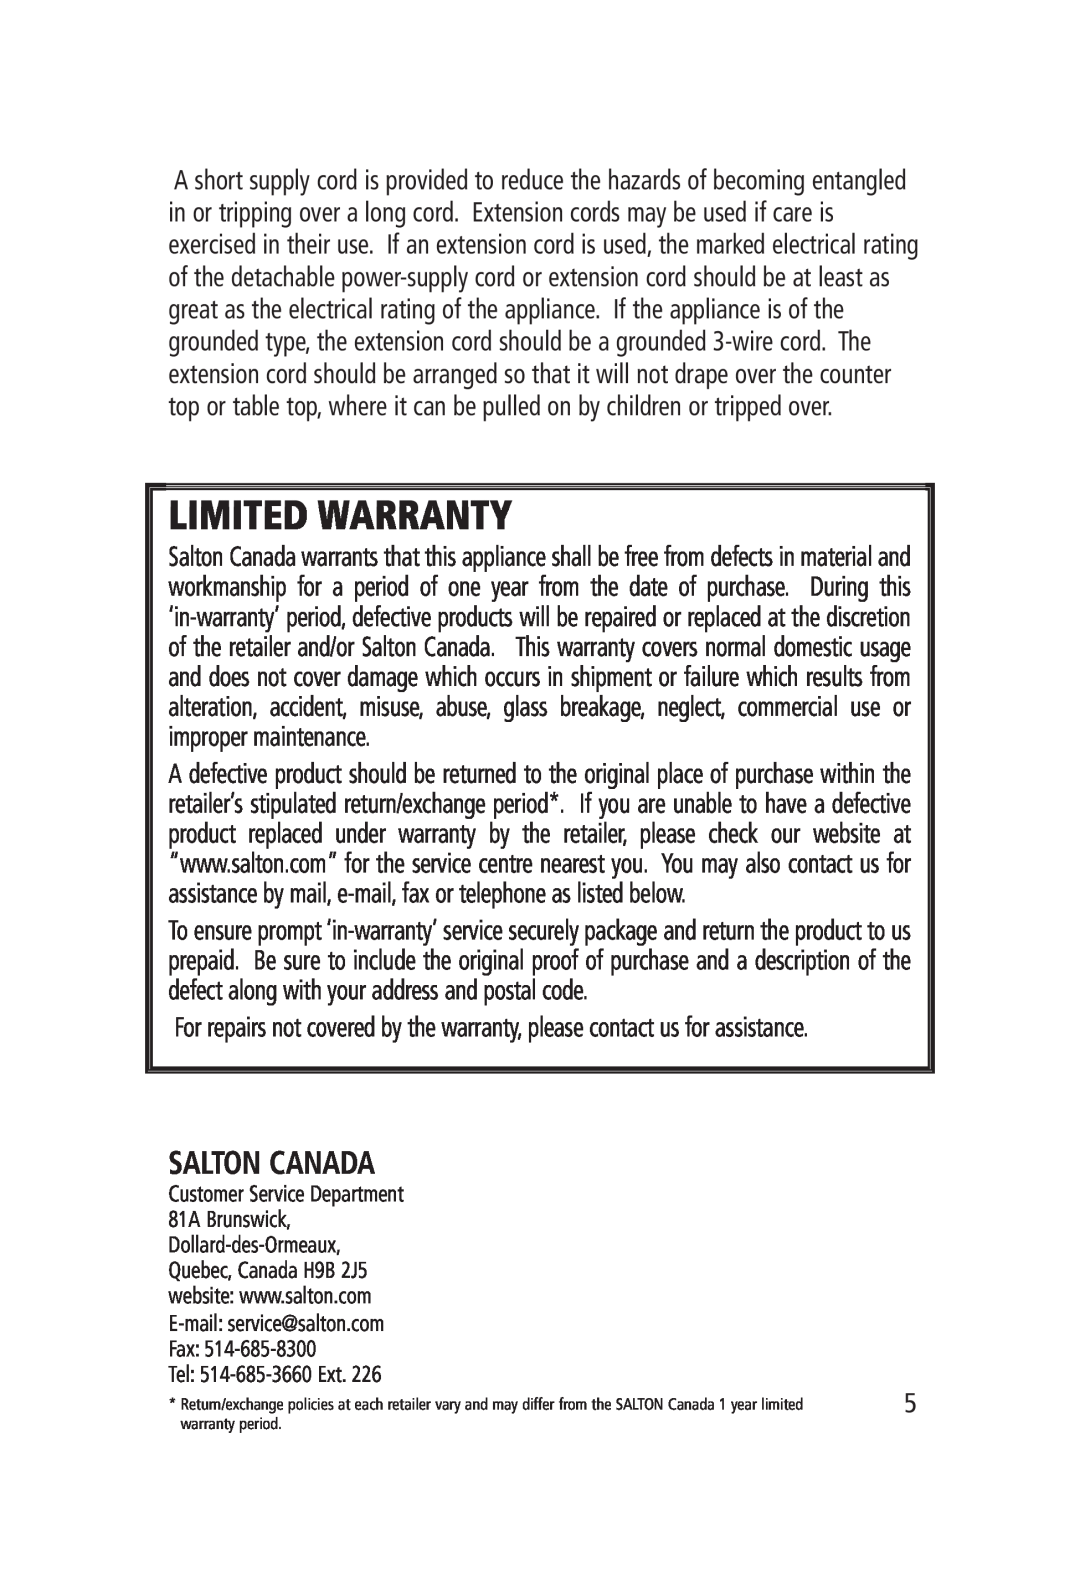 Salton JK-1199 manual Salton Canada, Limited Warranty 